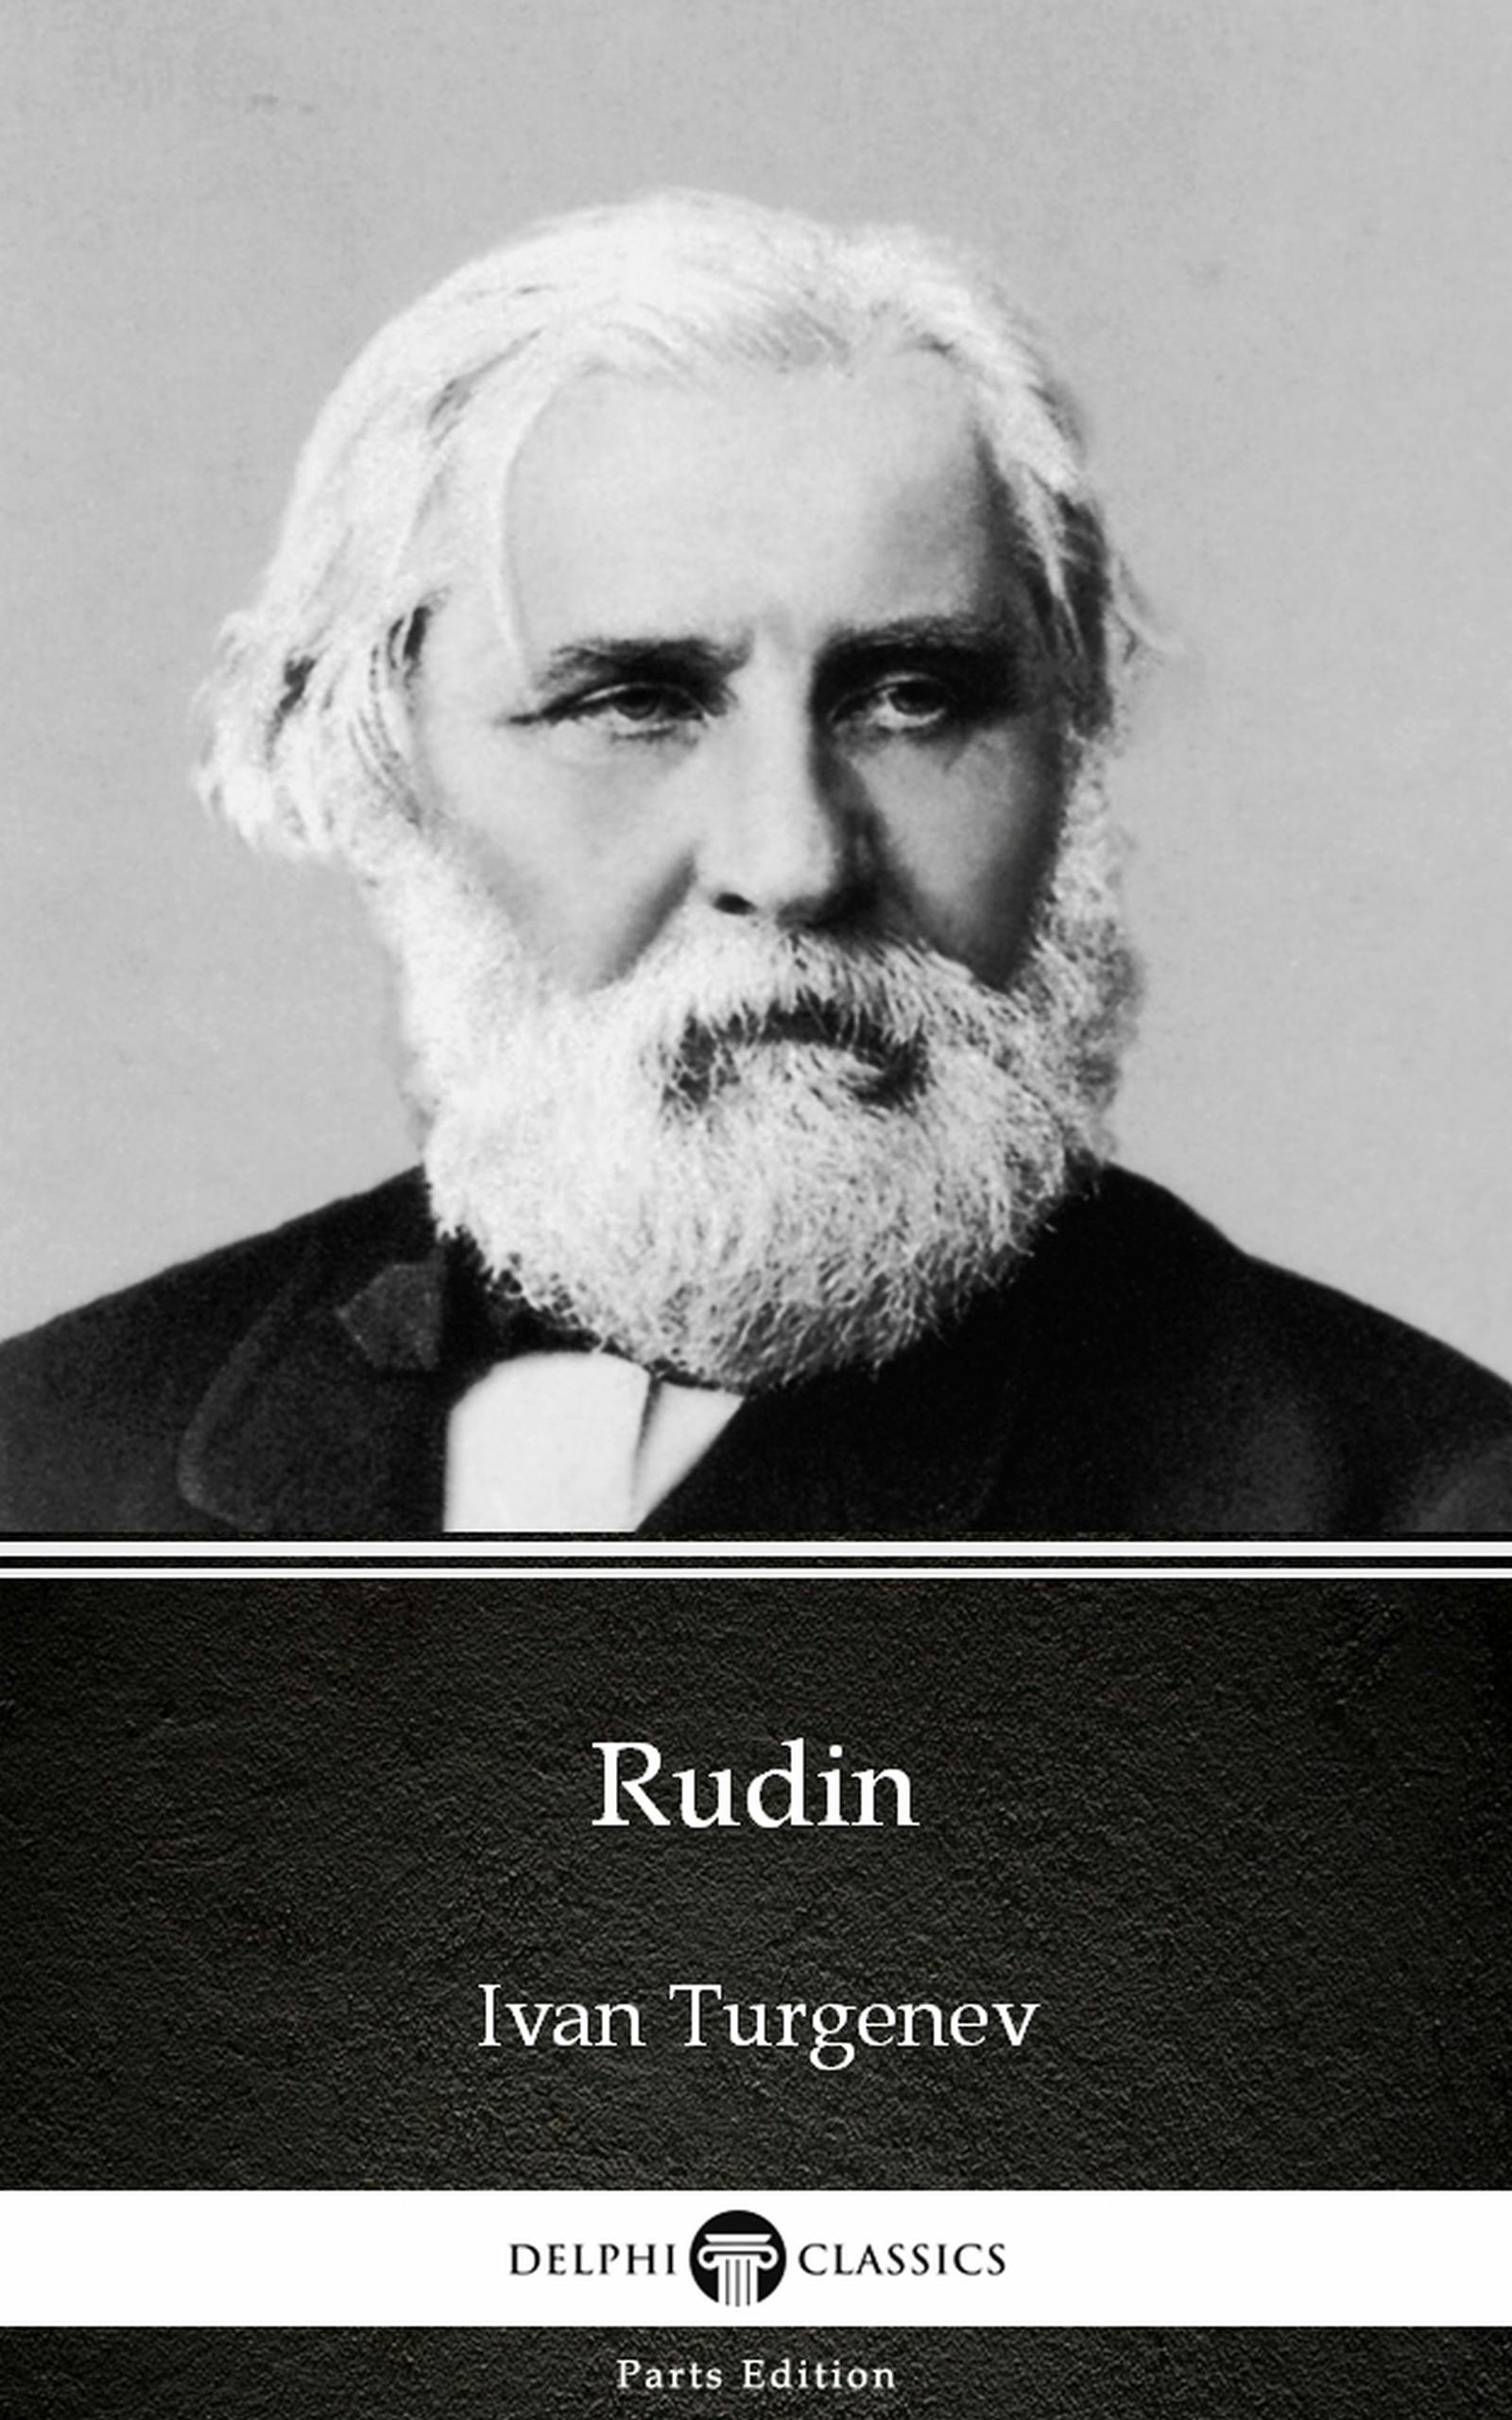 Rudin by Ivan Turgenev - Delphi Classics (Illustrated) - Ivan Turgenev